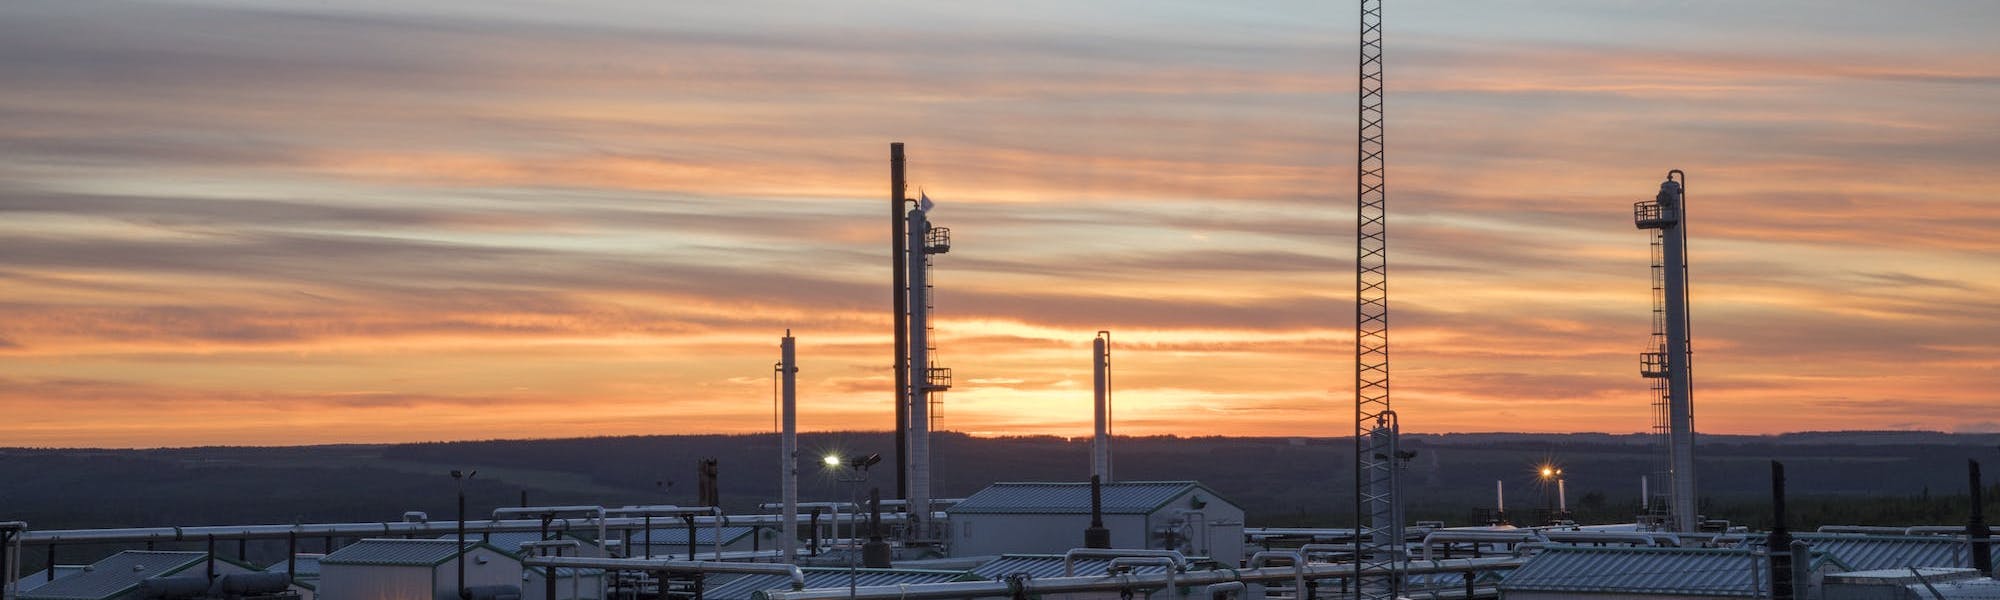 A gas plant backlit by a vivid orange and purple sky.